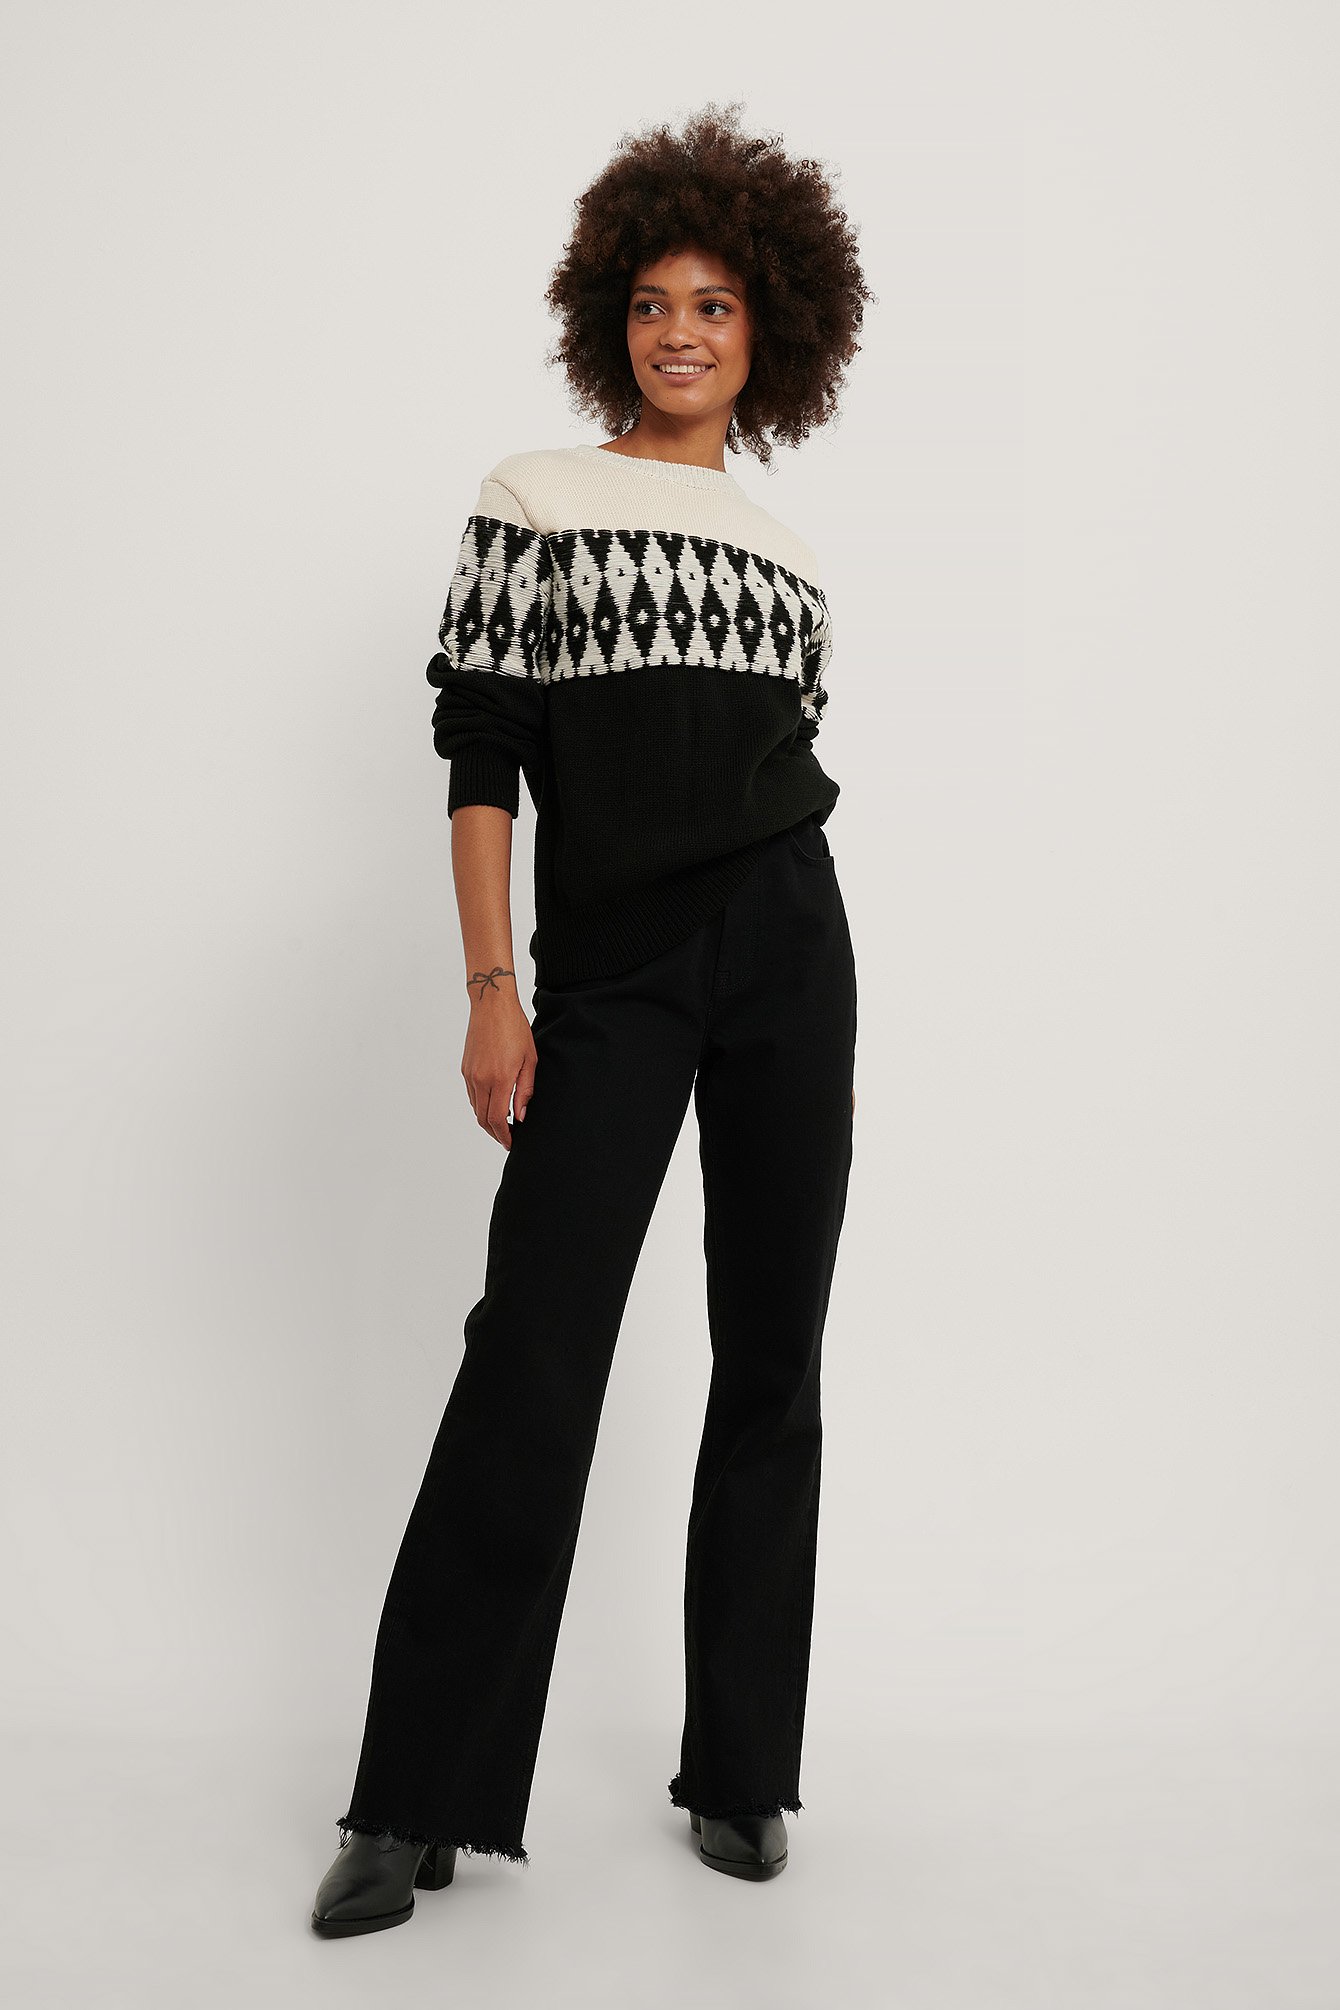 Black Pattern Knit Sweater